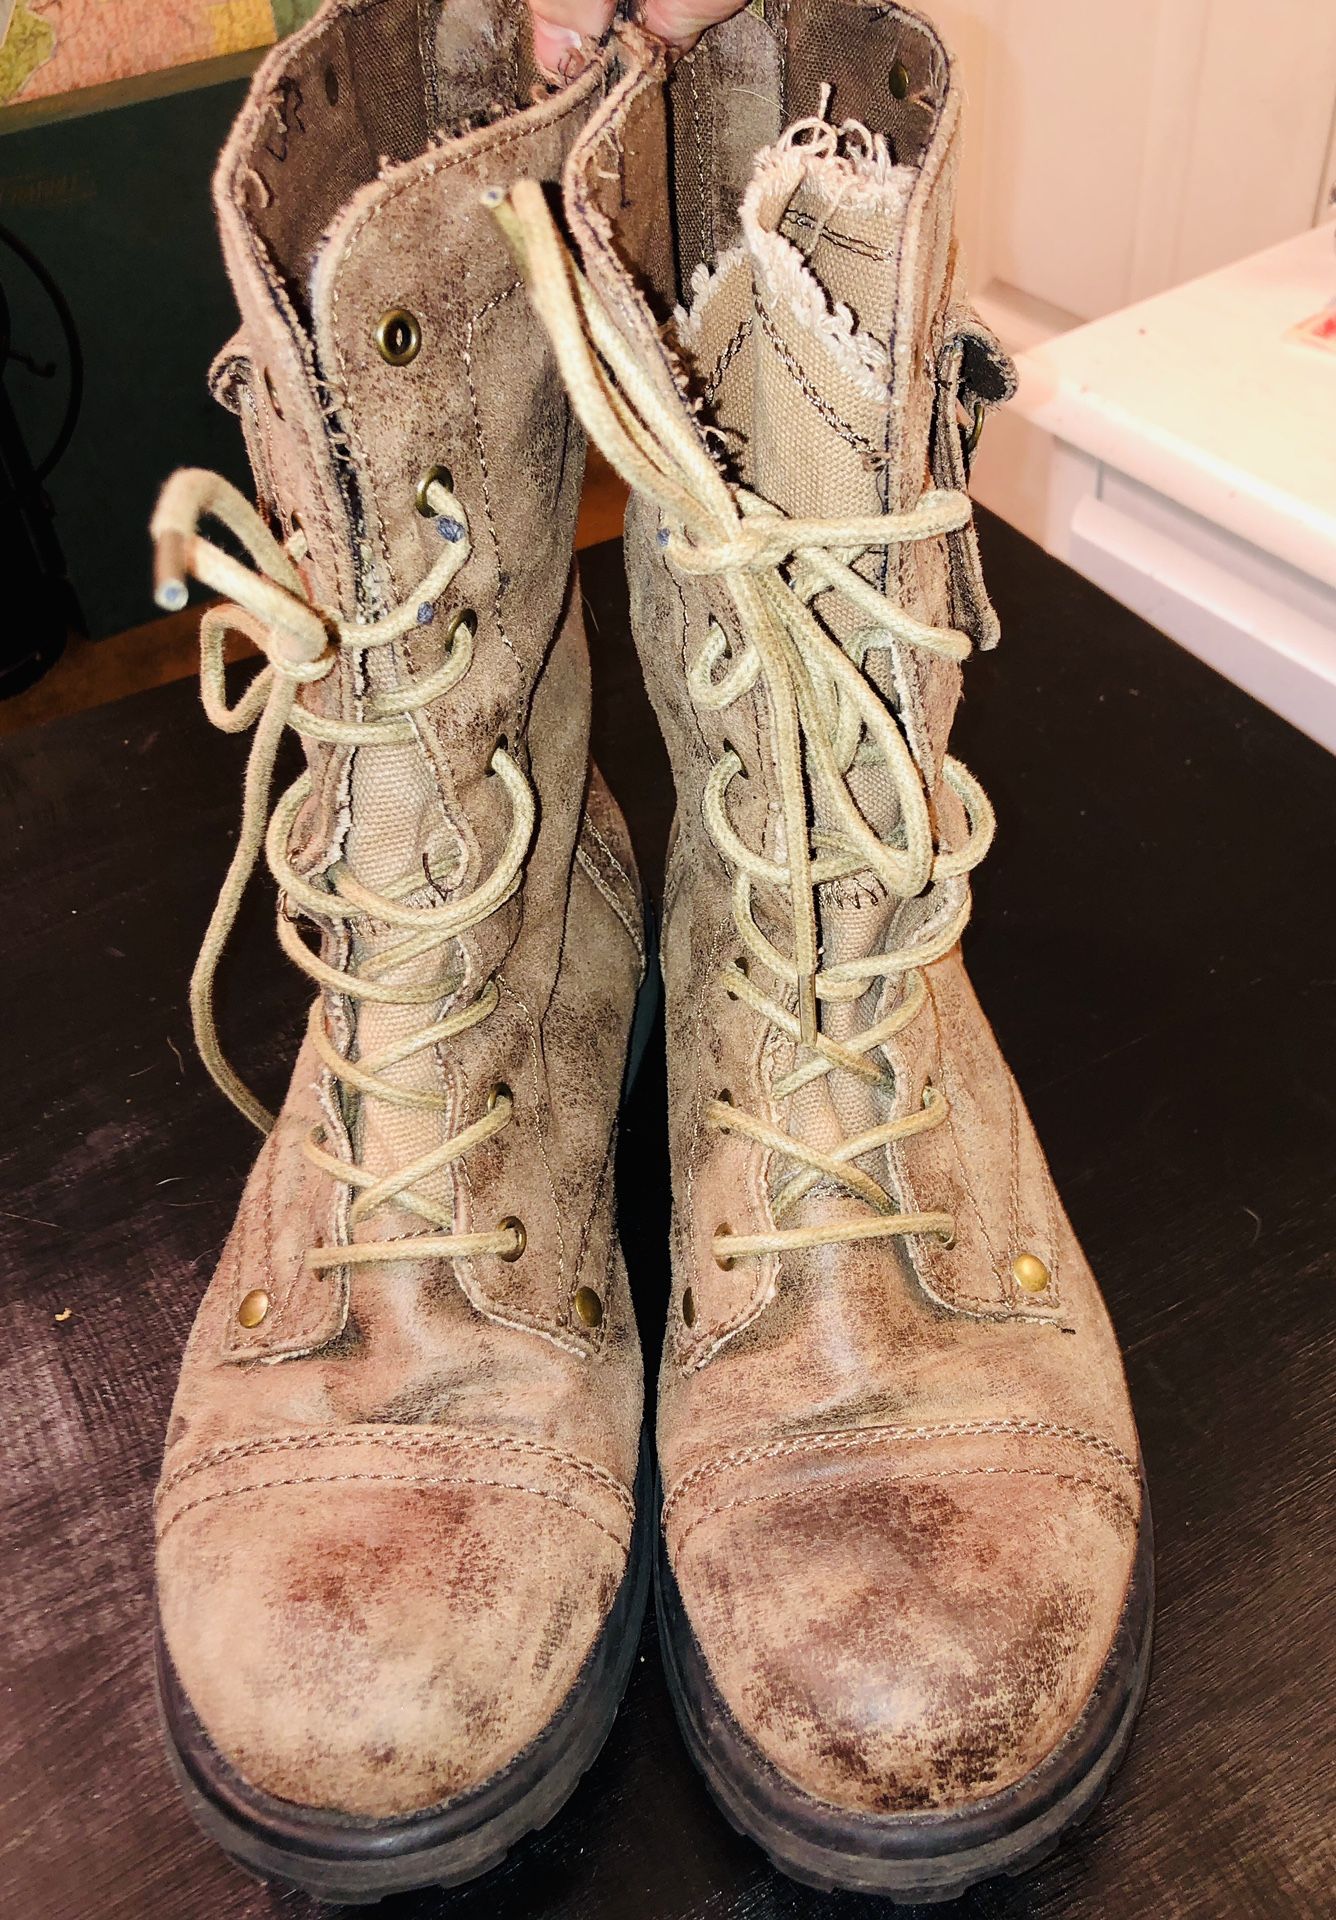 Roxy tan combat boots size 9